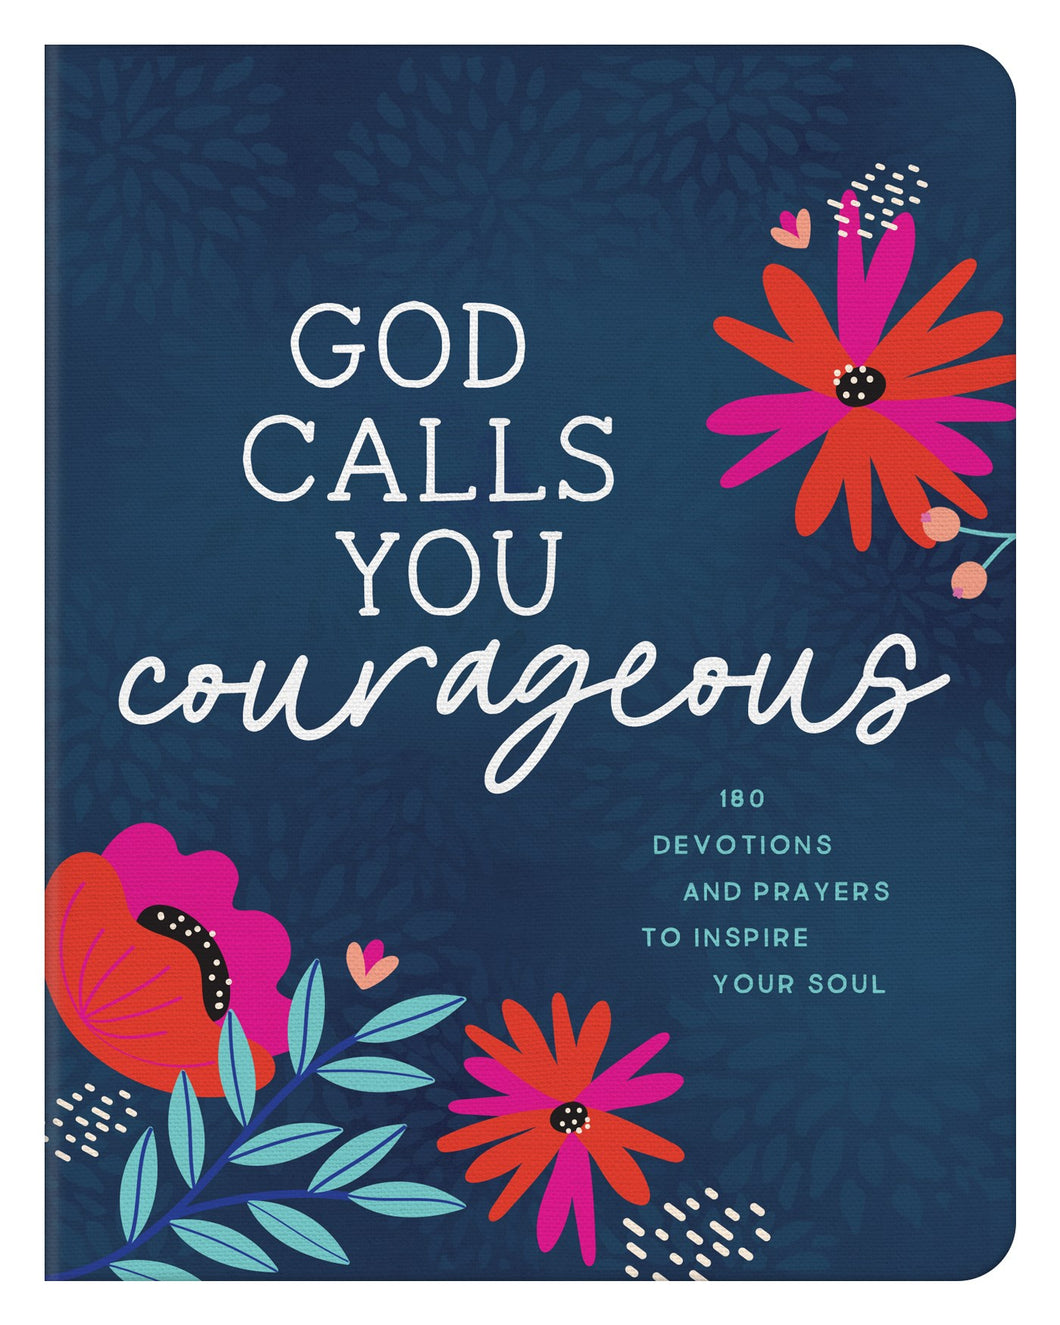 God Calls Your Courageous